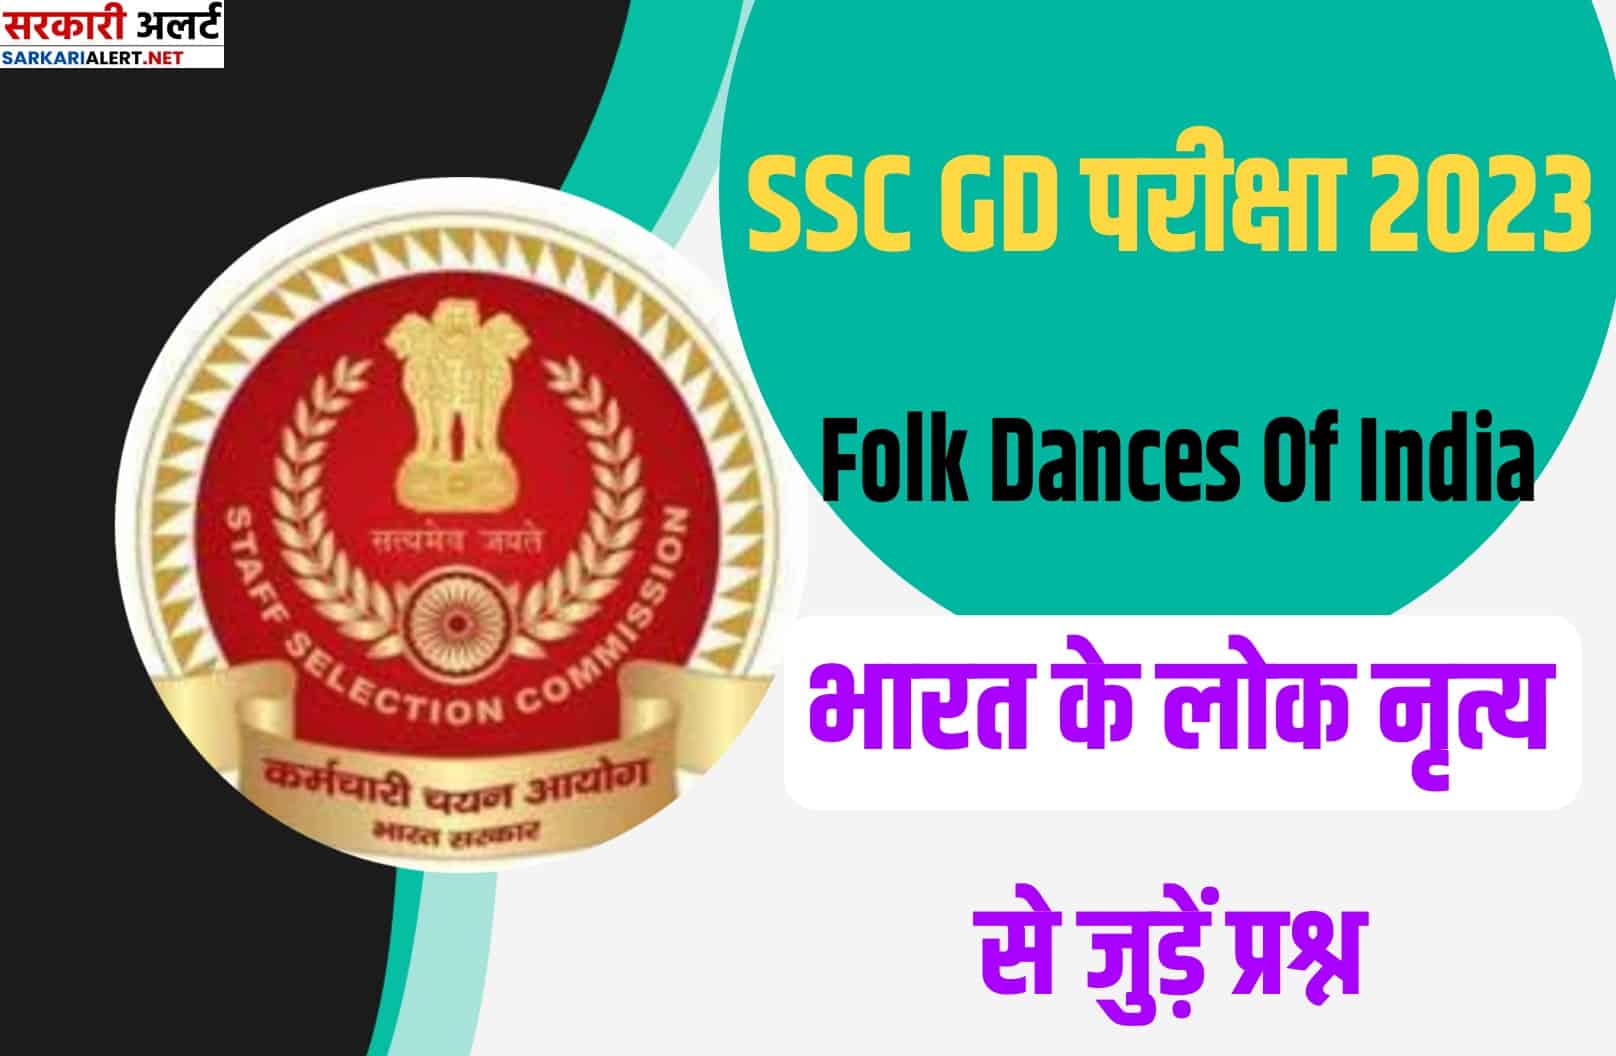 SSC GD Exam 2023 Folk Dances of India Expected Questions | एसएससी जीडी परीक्षा भारत के लोक नृत्य पर आधारित मुख्य प्रश्न